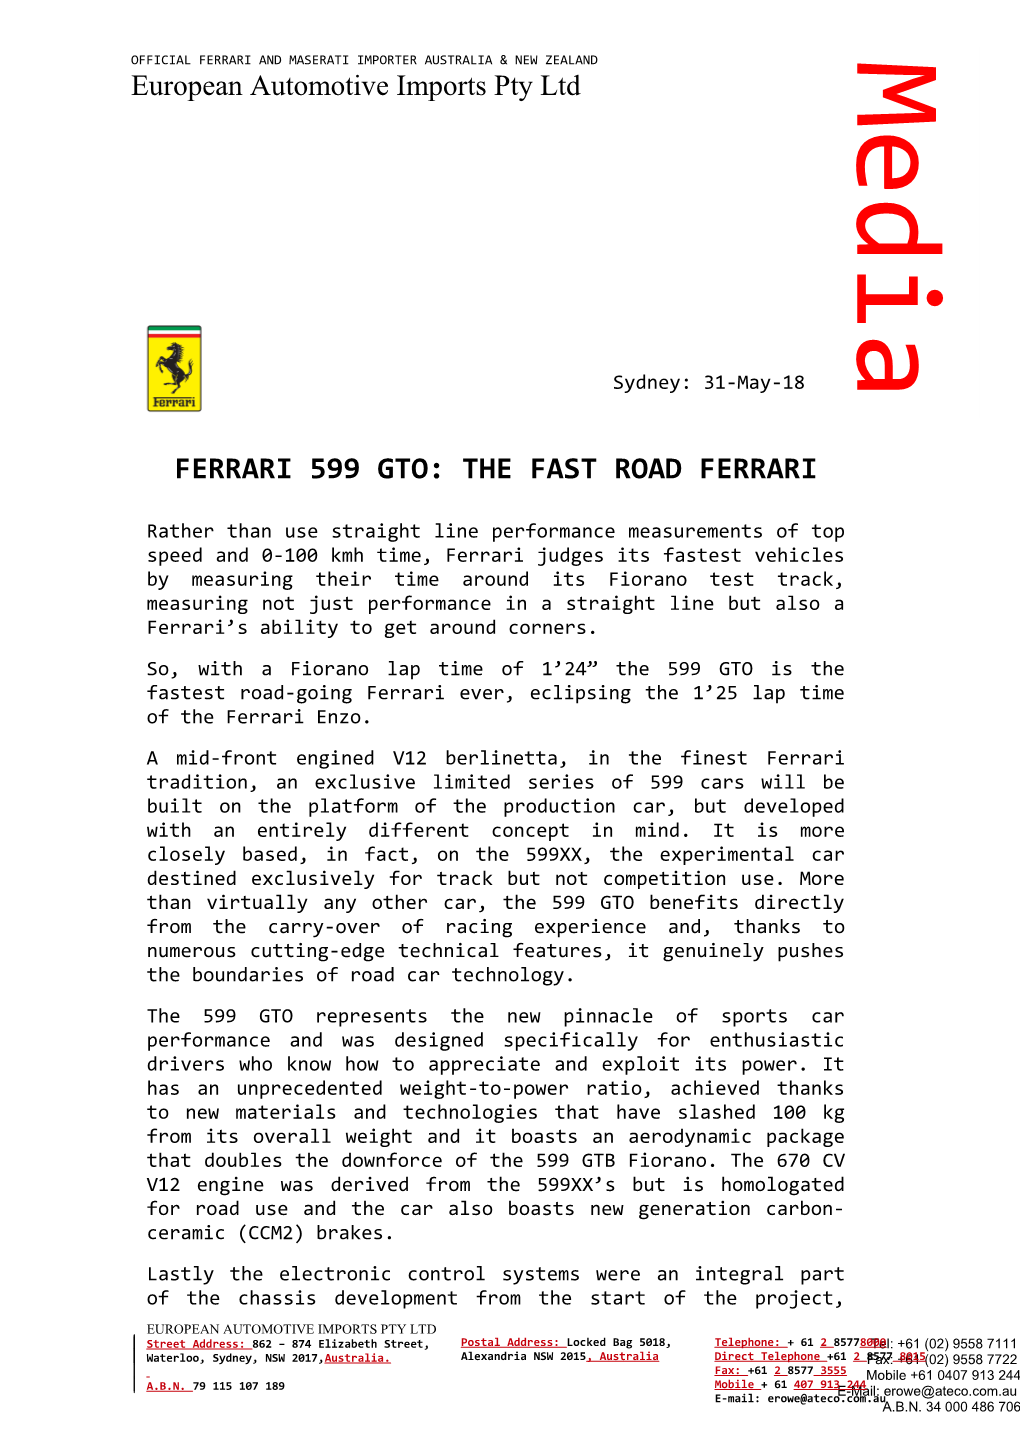 Ferrari 599 Gto: the Fast Road Ferrari